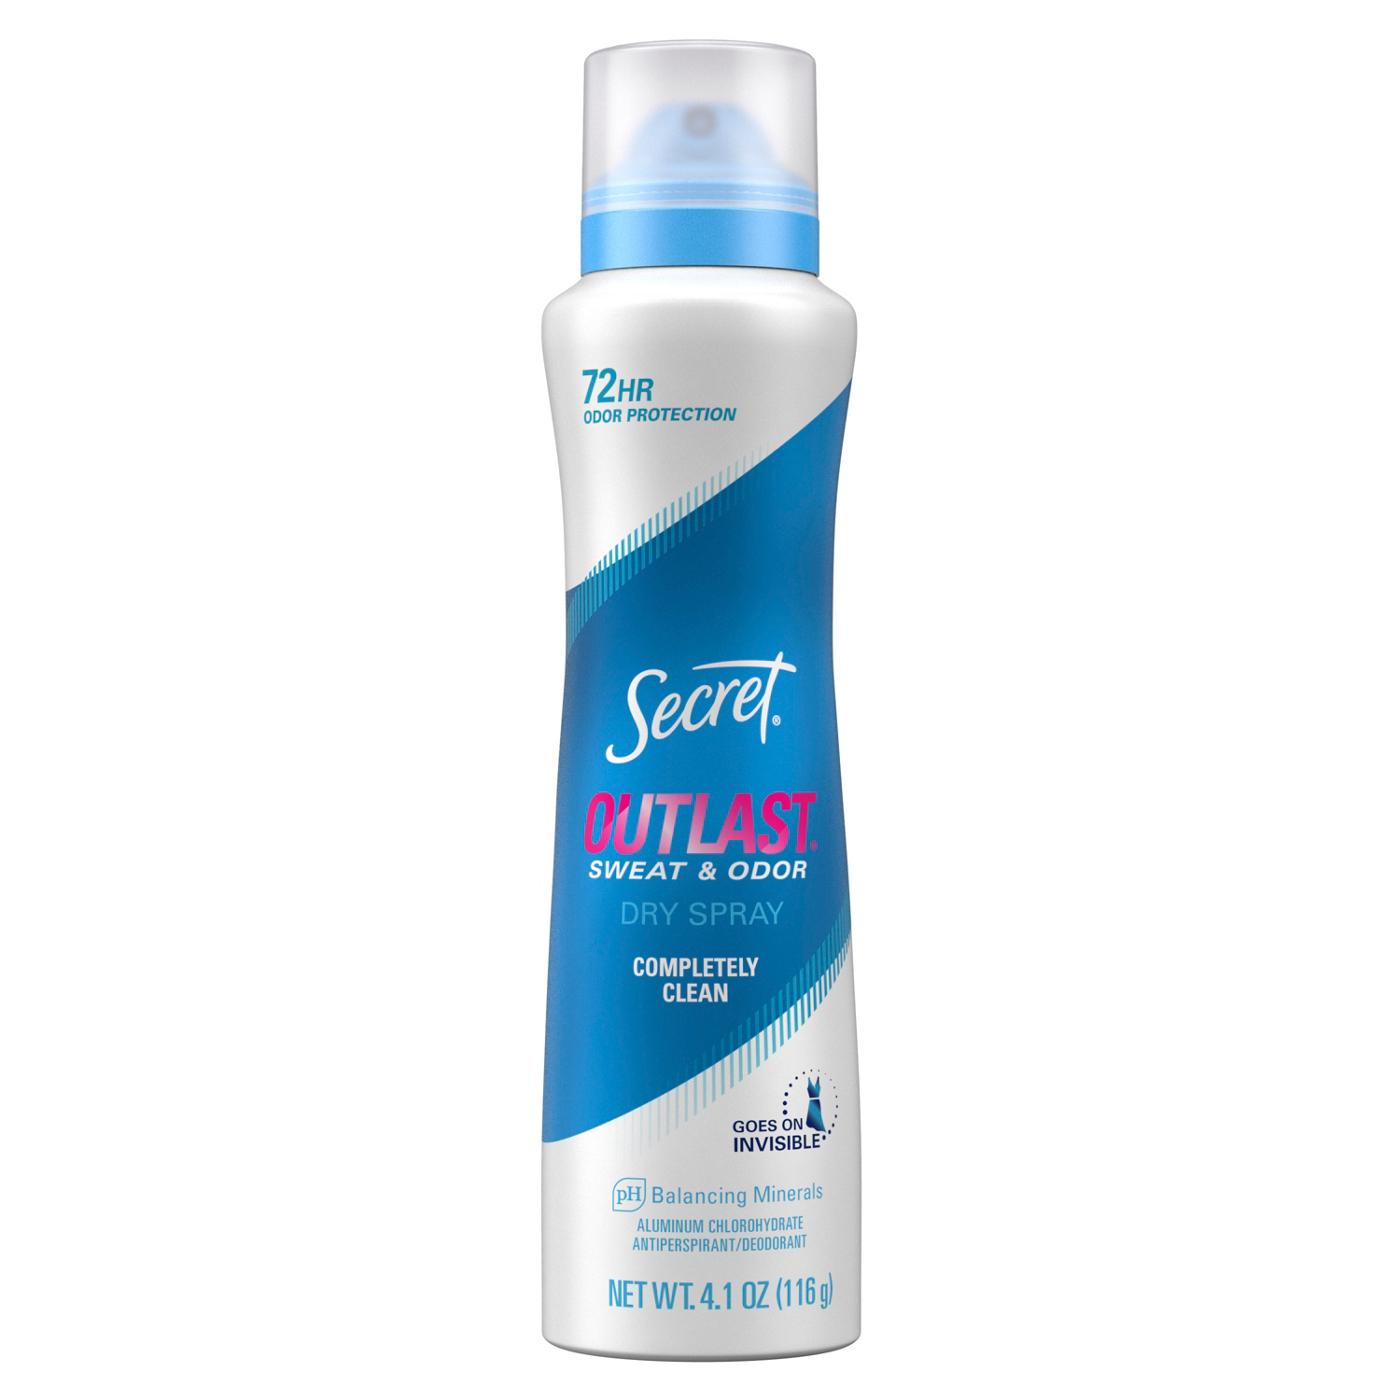 Secret Outlast 72 Hr Antiperspirant Deodorant Dry Spray - Completely Clean; image 1 of 2